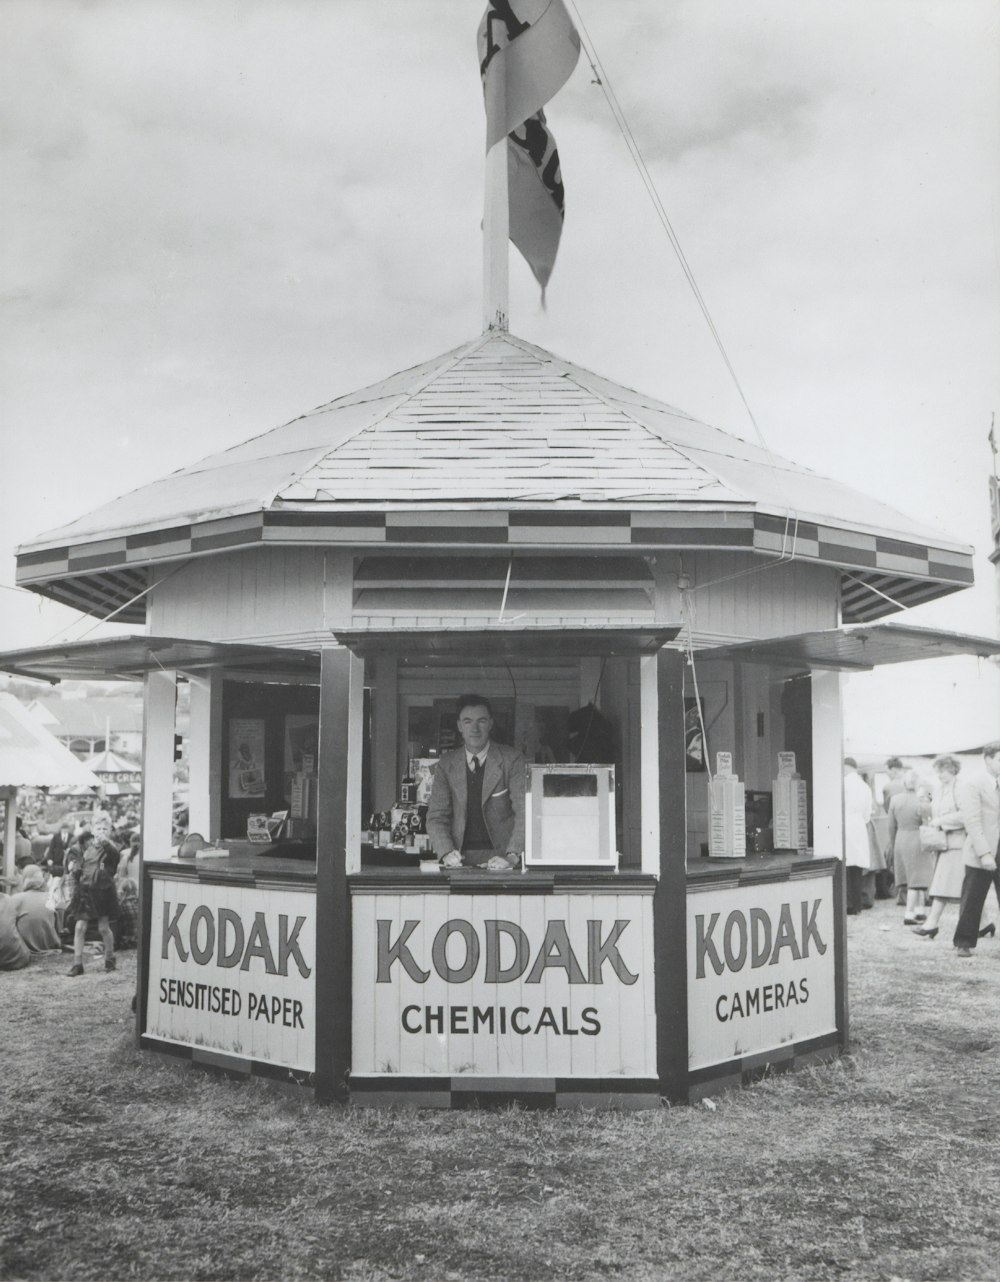 Kodak Chemicals shed